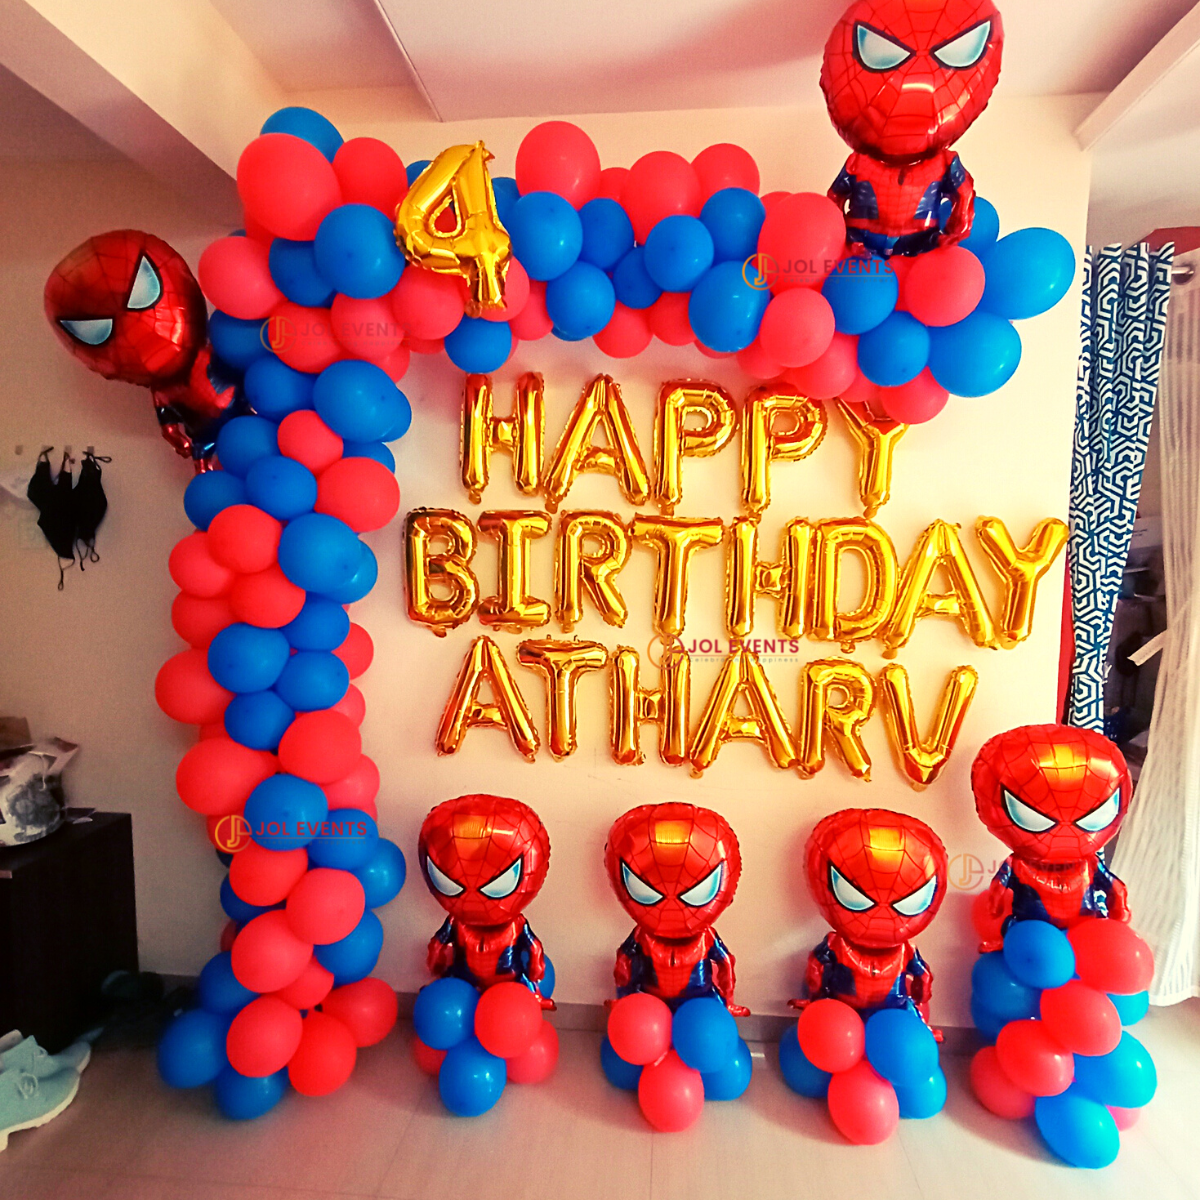 Spiderman Theme Balloon Decoration – jolevents